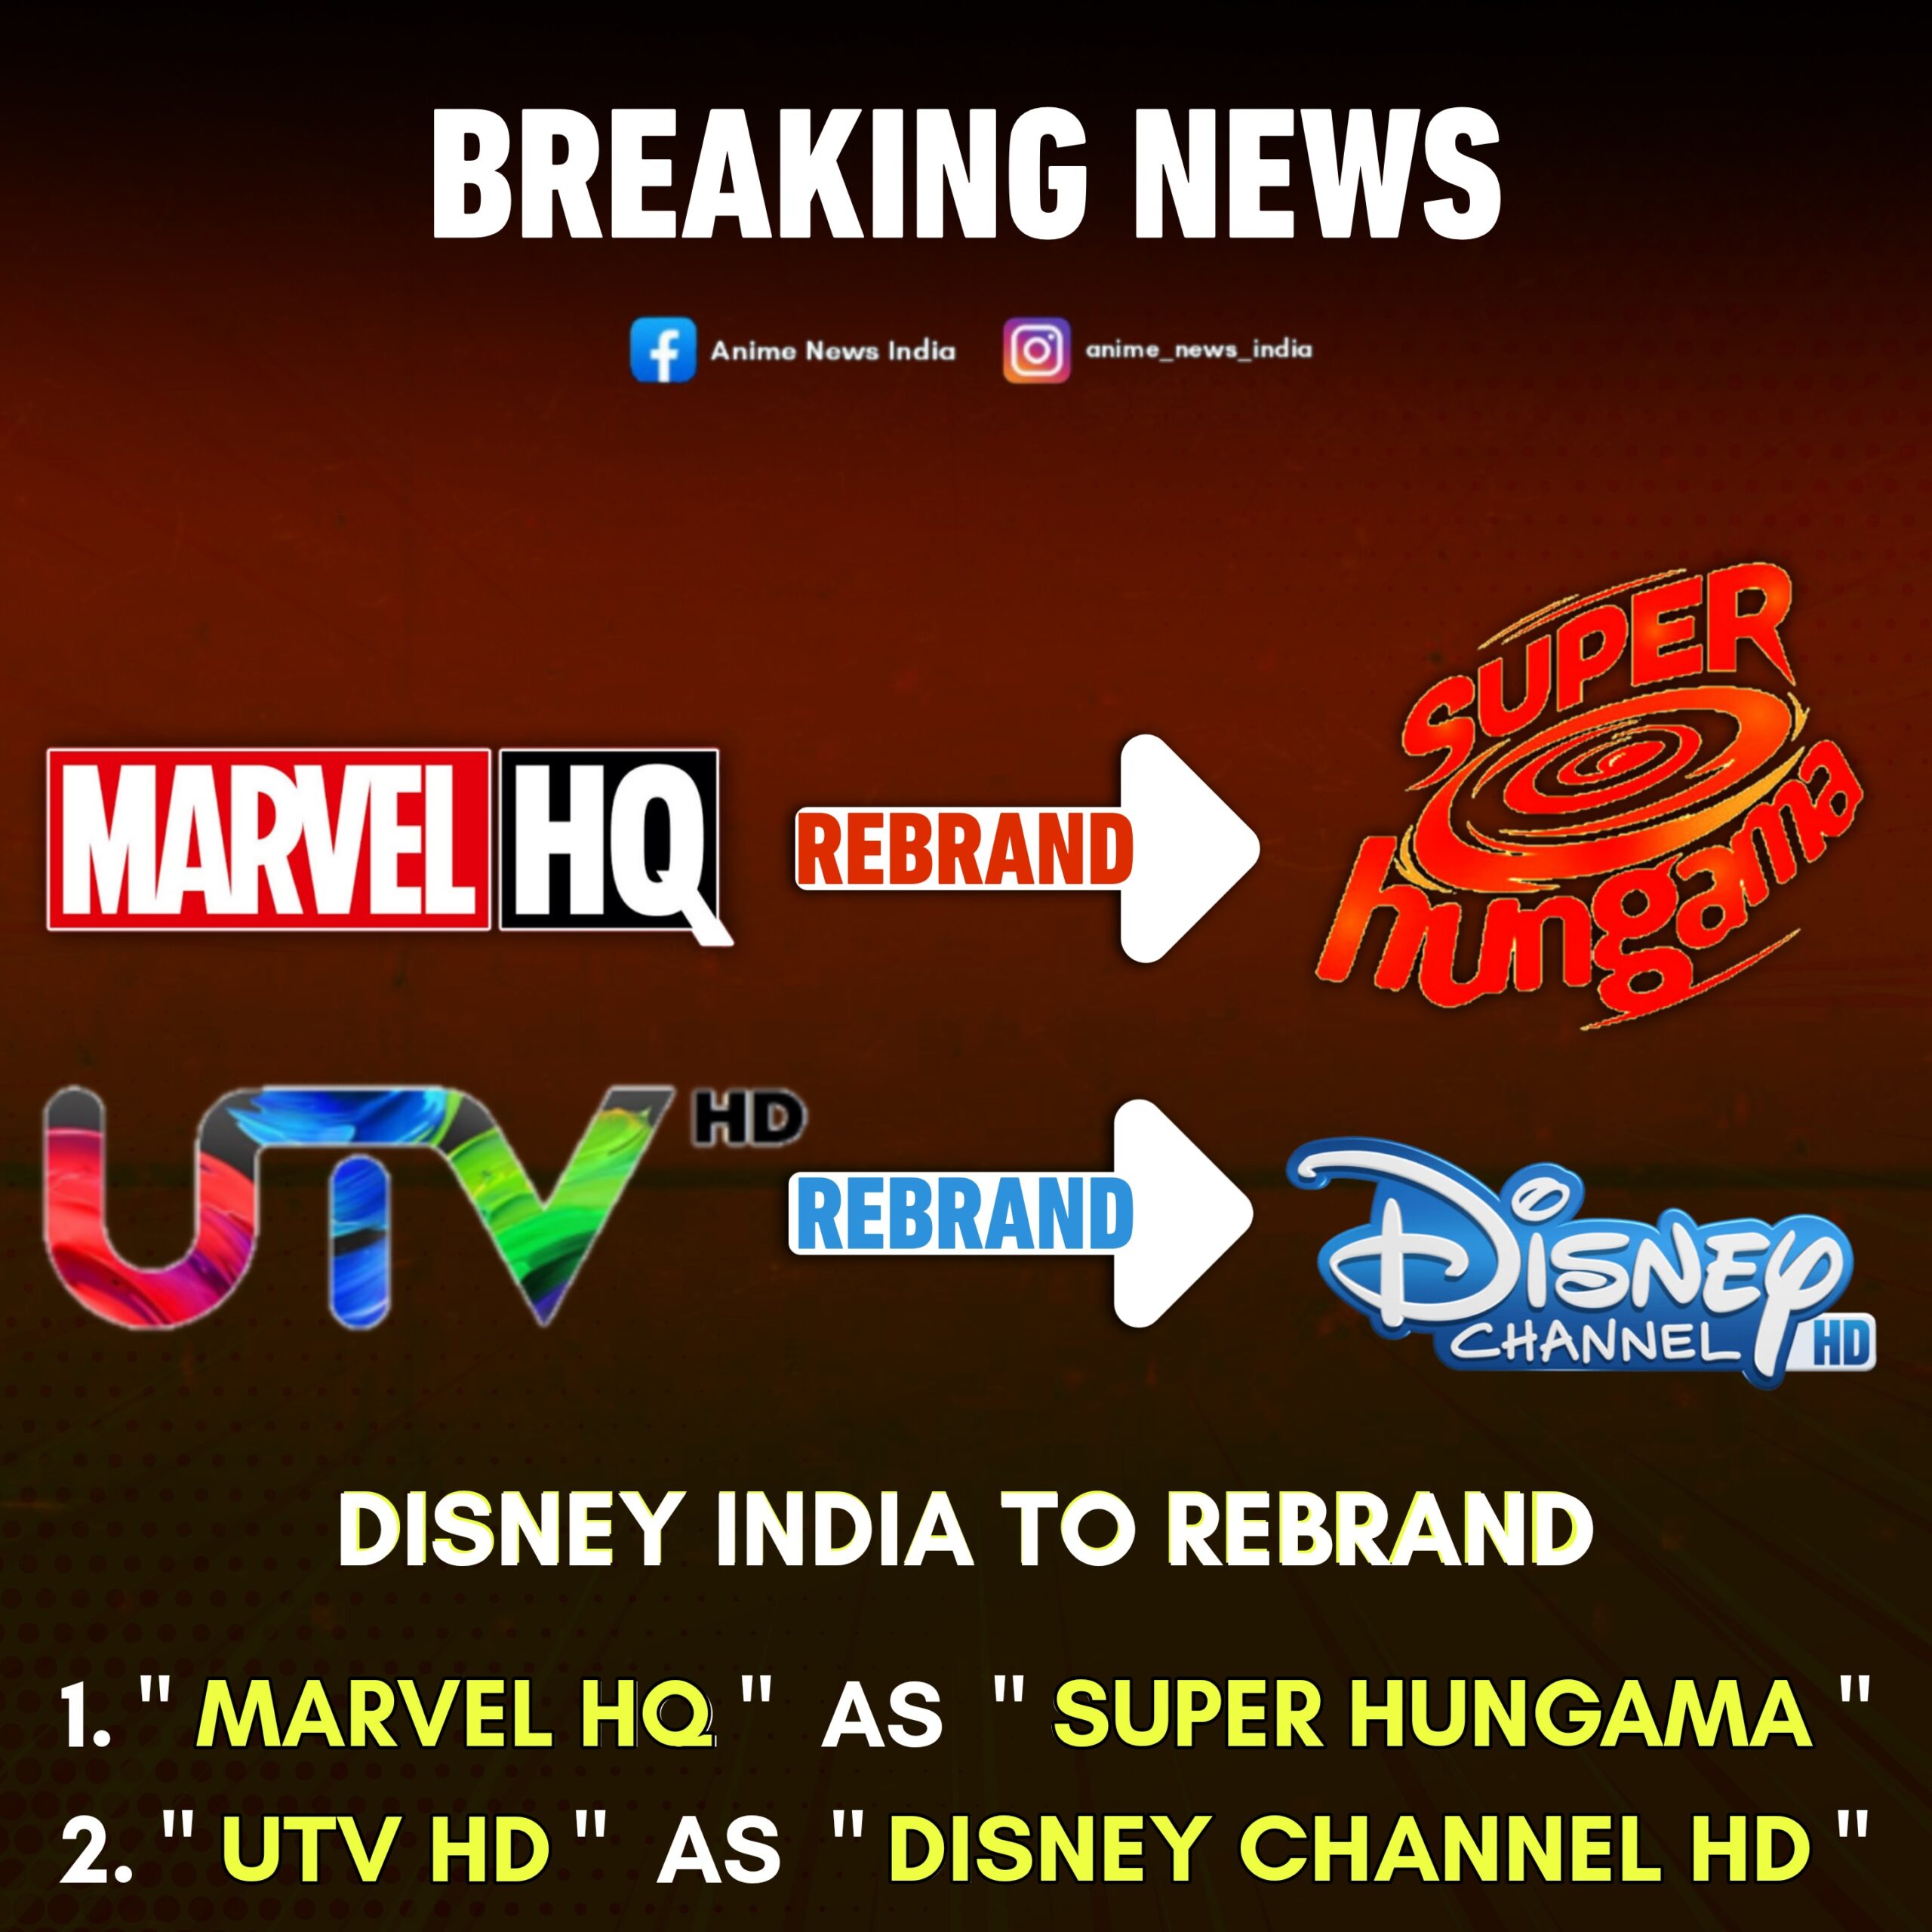 Disney India To Rebrand Marvel HQ as Super Hungama Soon.